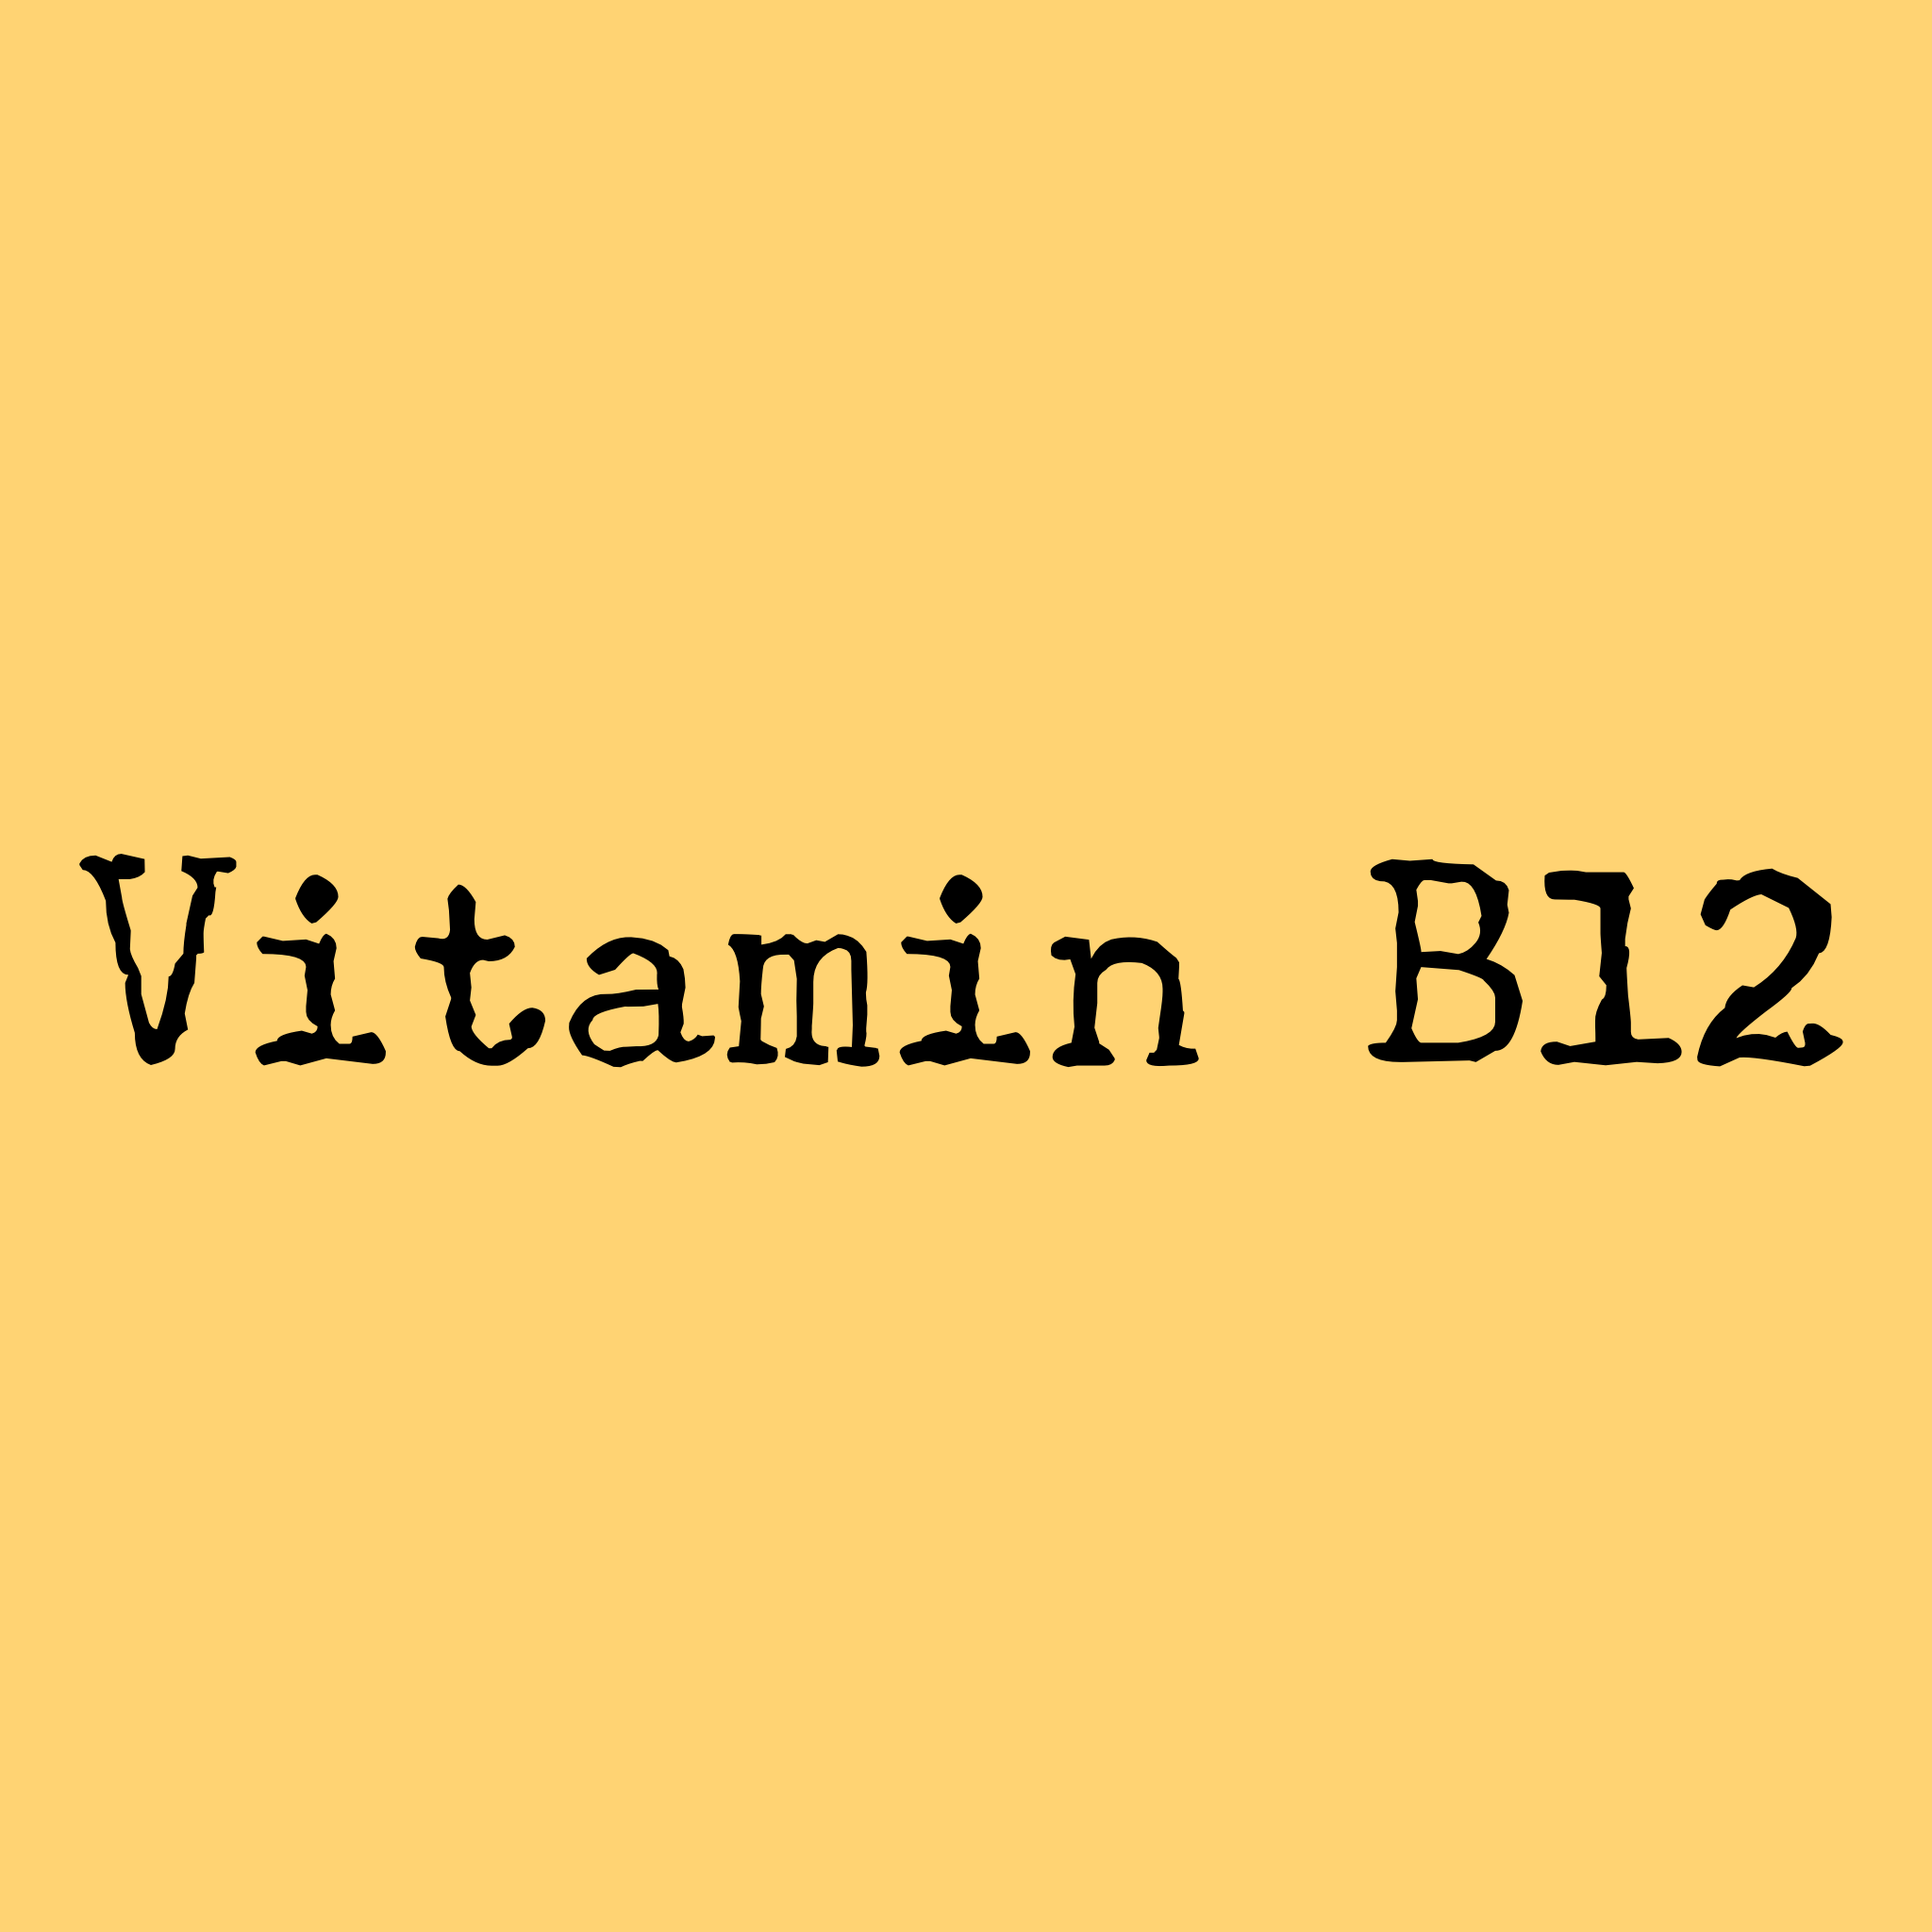 Benefits of Vitamin B12